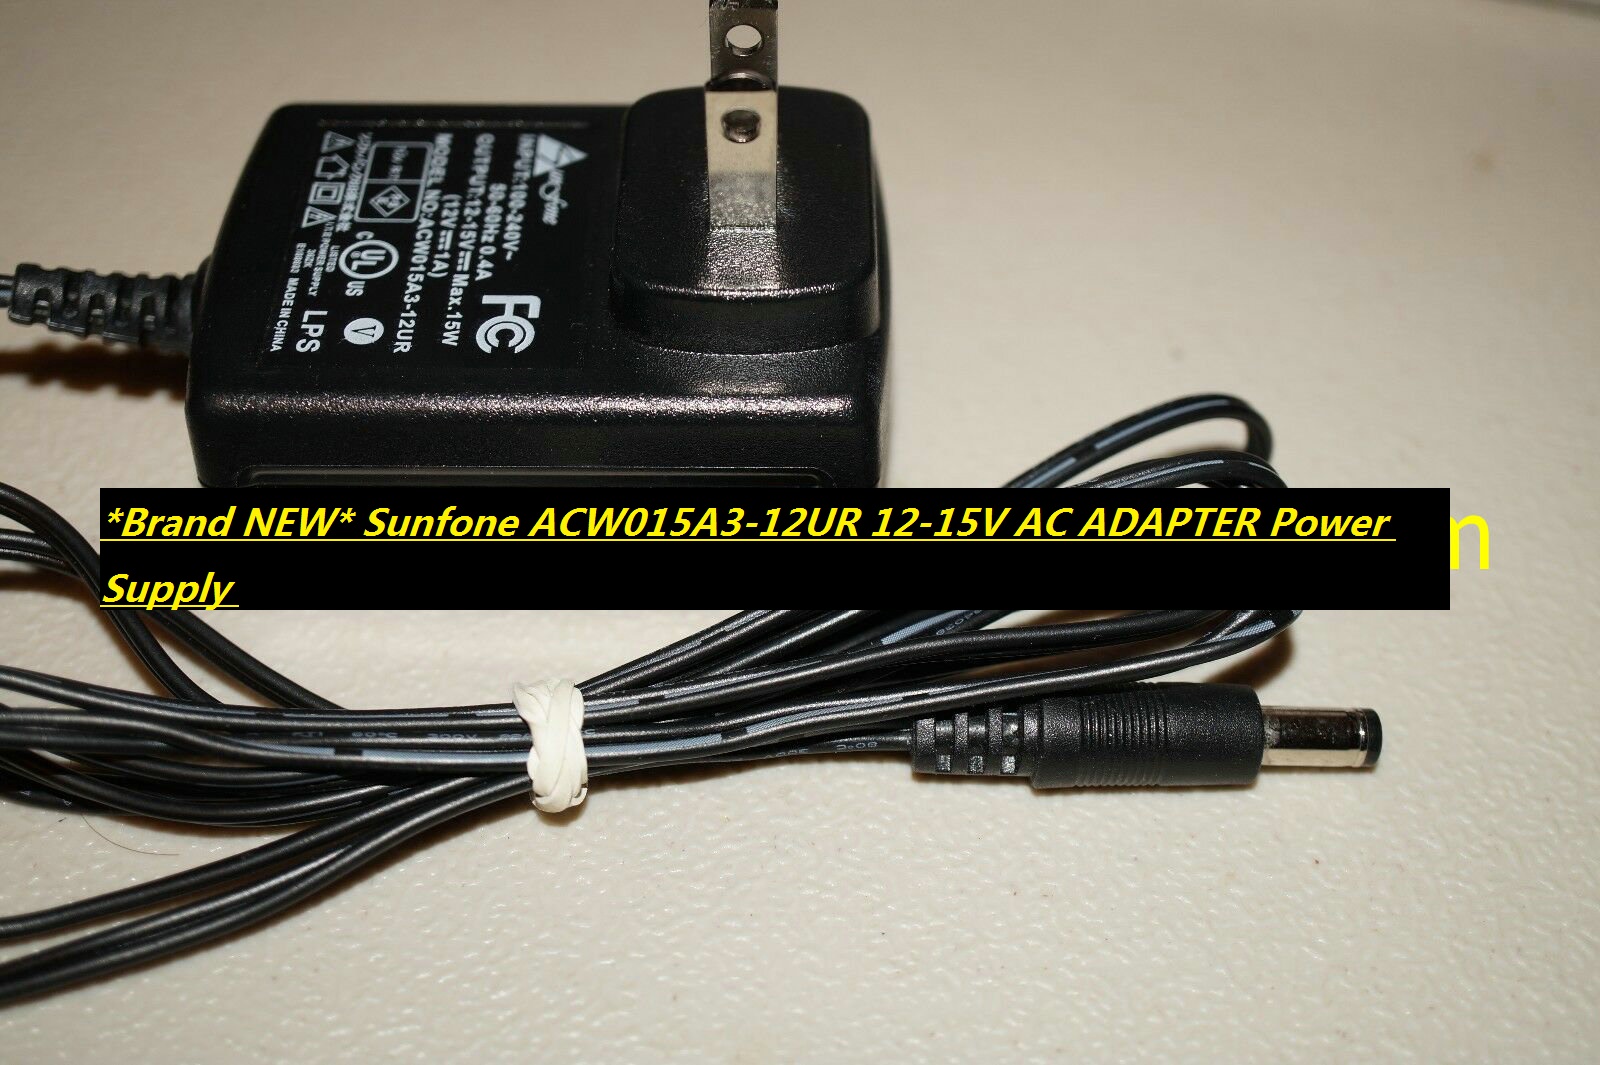 *Brand NEW* Sunfone ACW015A3-12UR 12-15V AC ADAPTER Power Supply